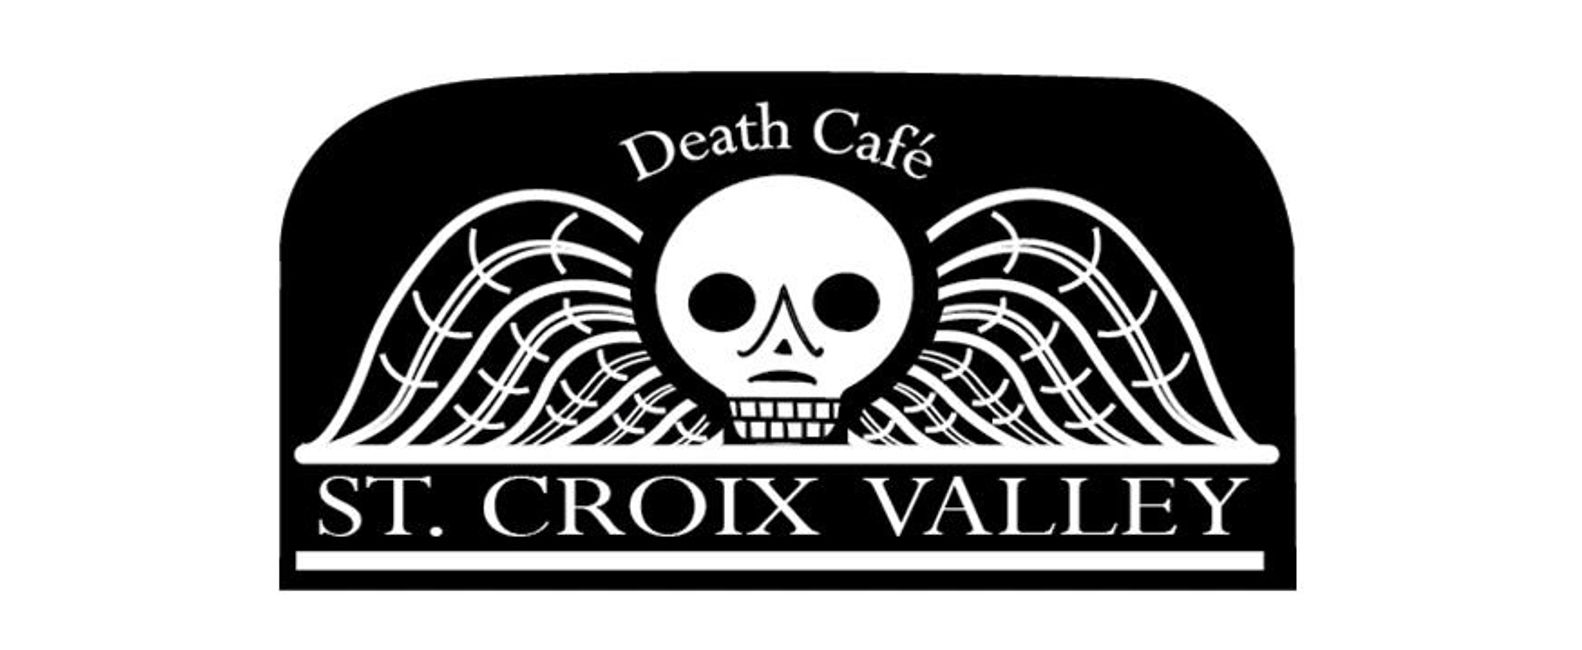 Death Cafe St. Croix Valley